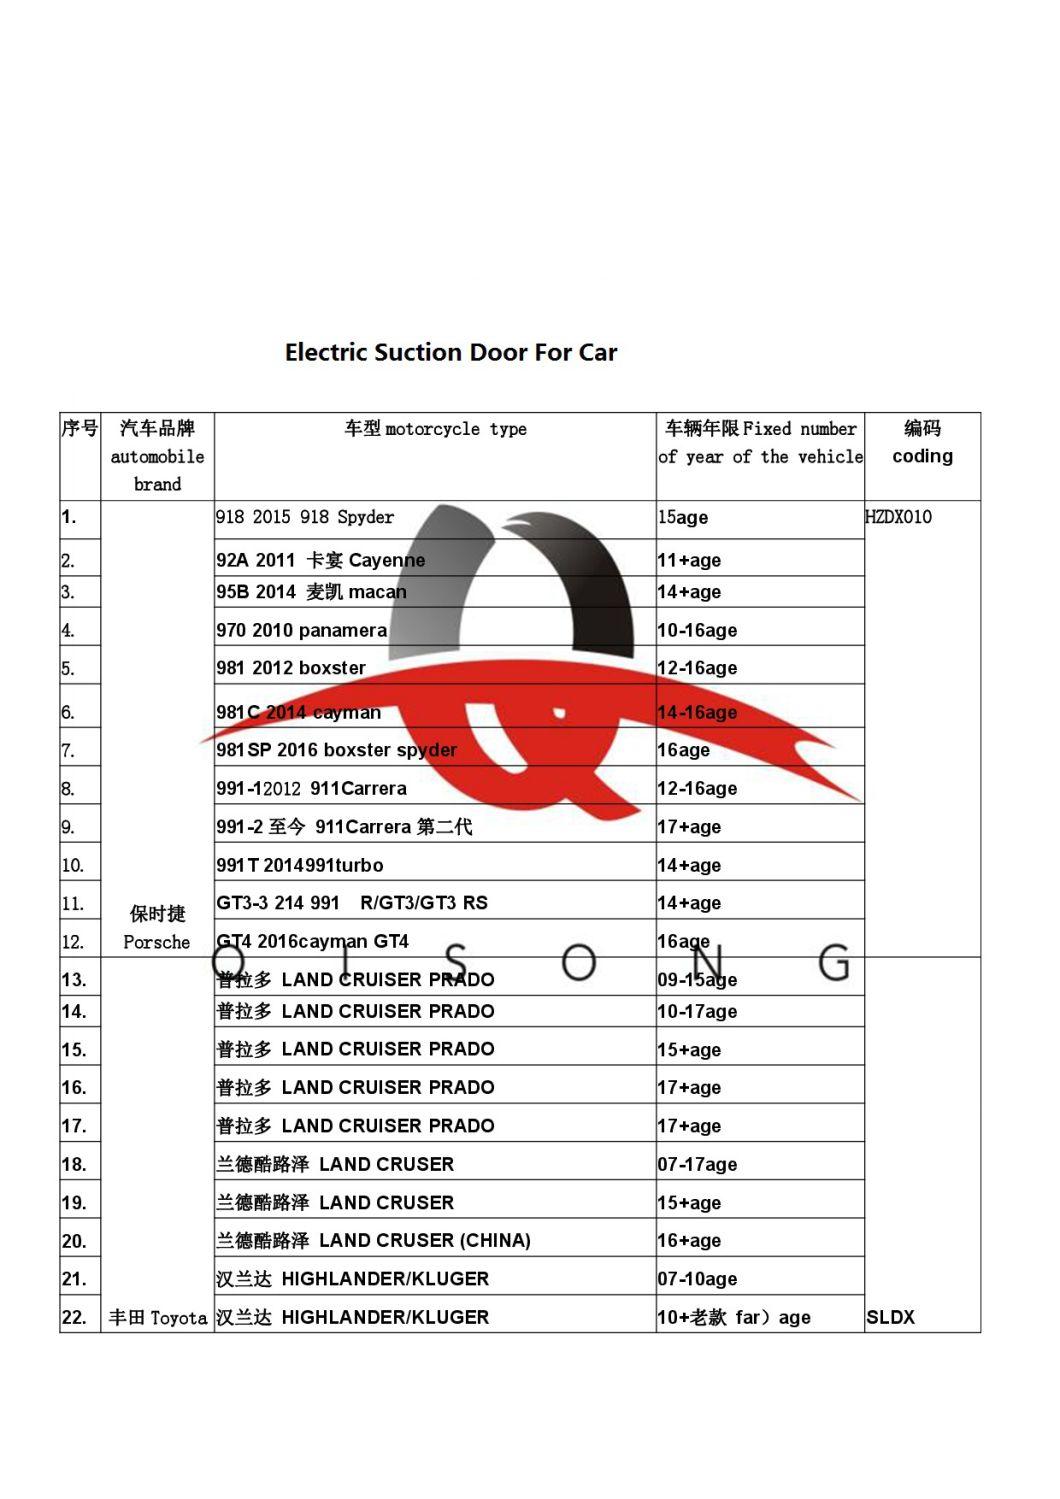 [Qisong] Universal Refitted Car Electric Suction Doors for RAV4 Prado Land Cruiser 200